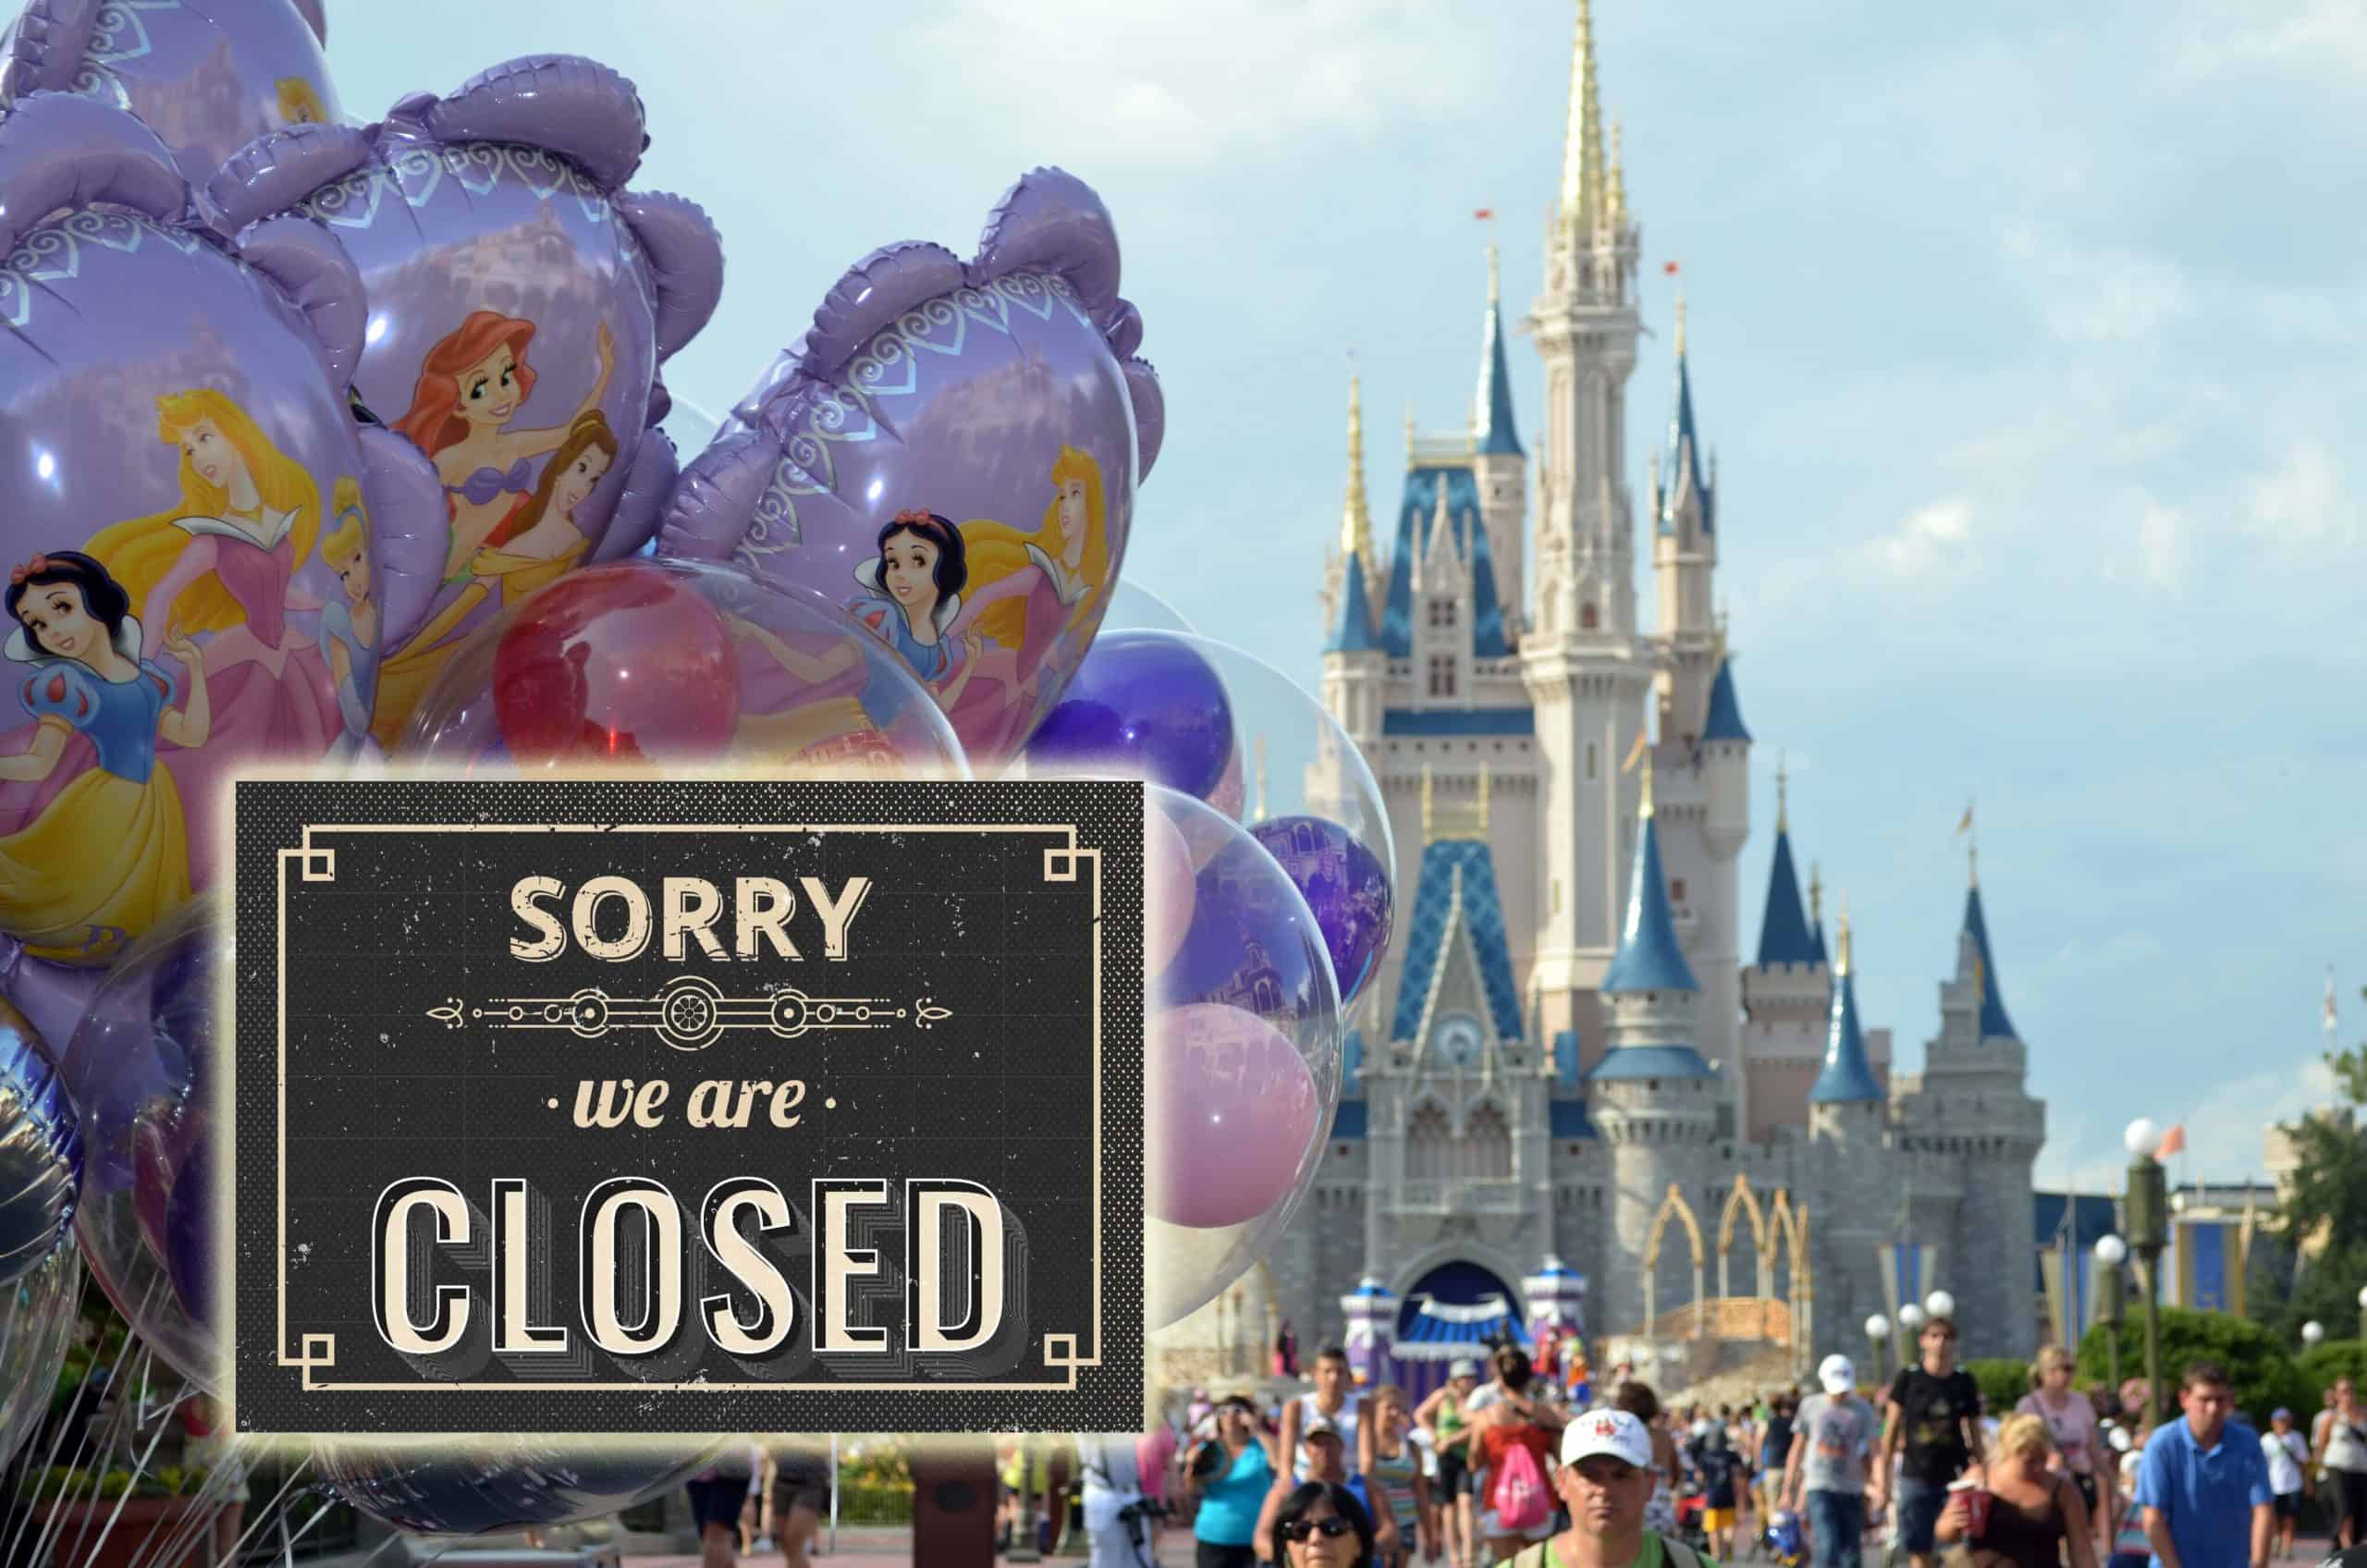 Disney is closed